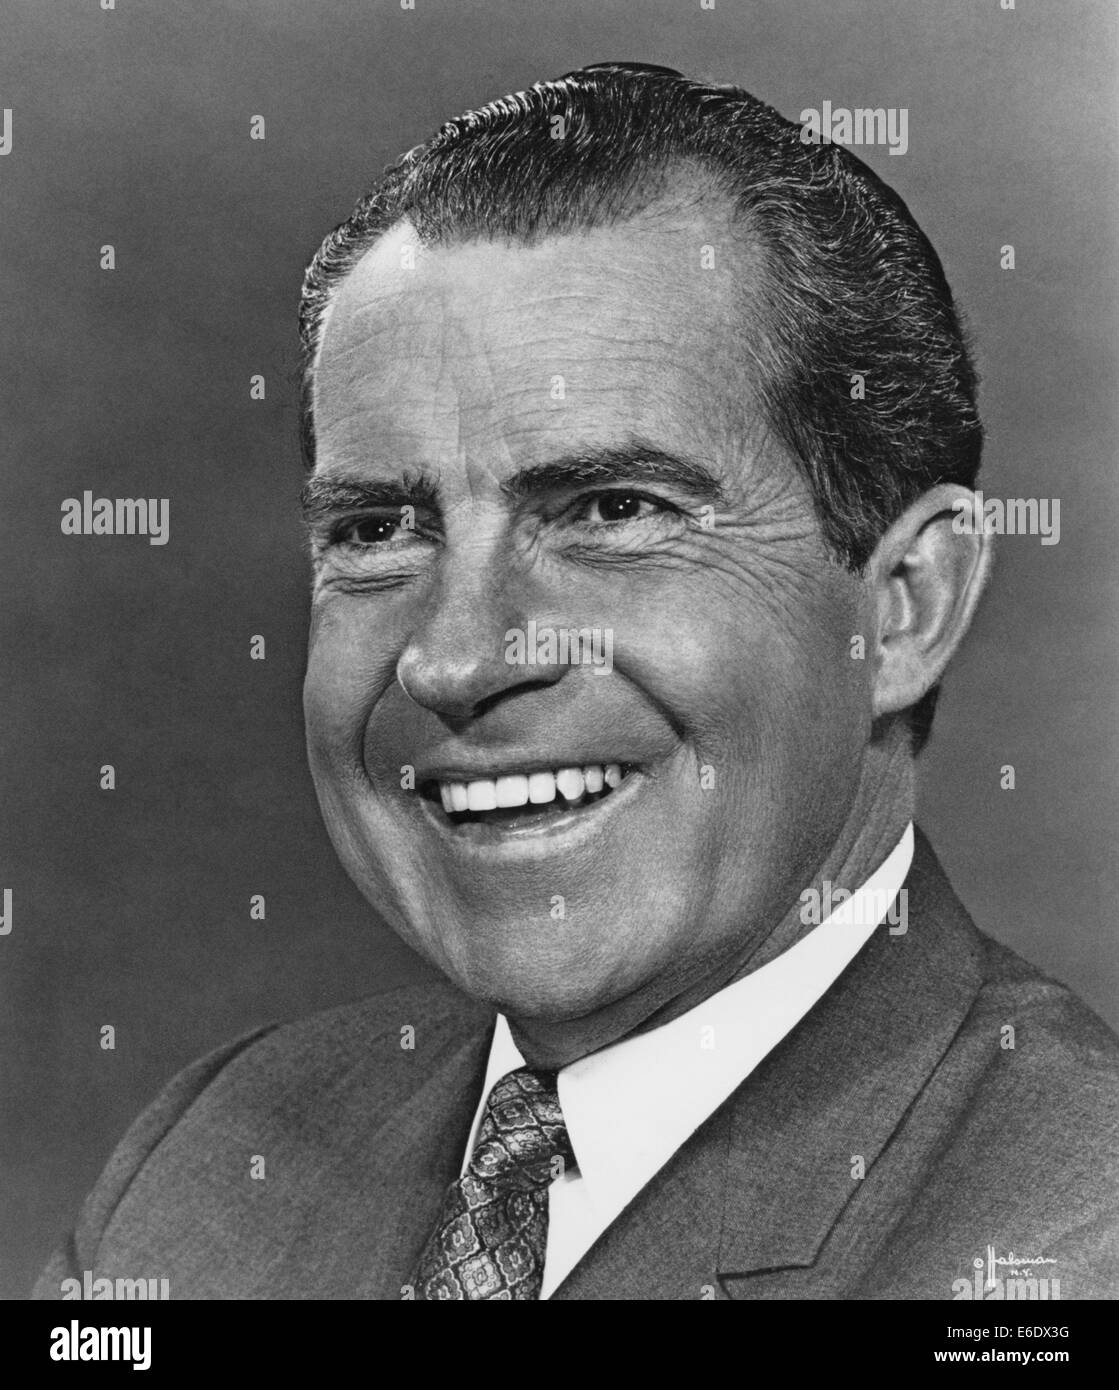 richard-m-nixon-1913-1994-37th-president-of-the-united-states-smiling-E6DX3G.jpg